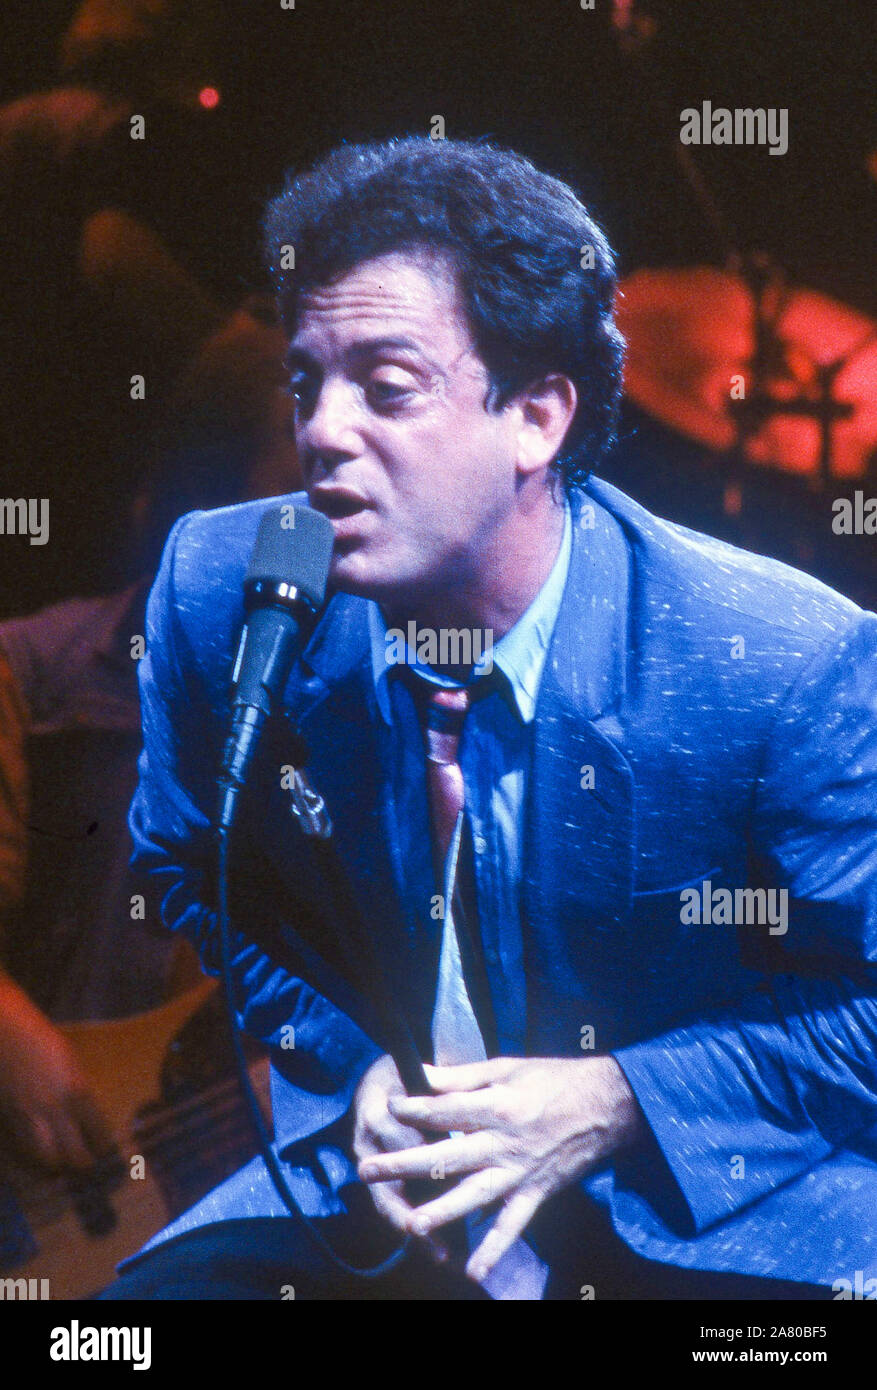 Billy Joel performing at Wembley Arena 8th June 1984 Stock Photo Alamy